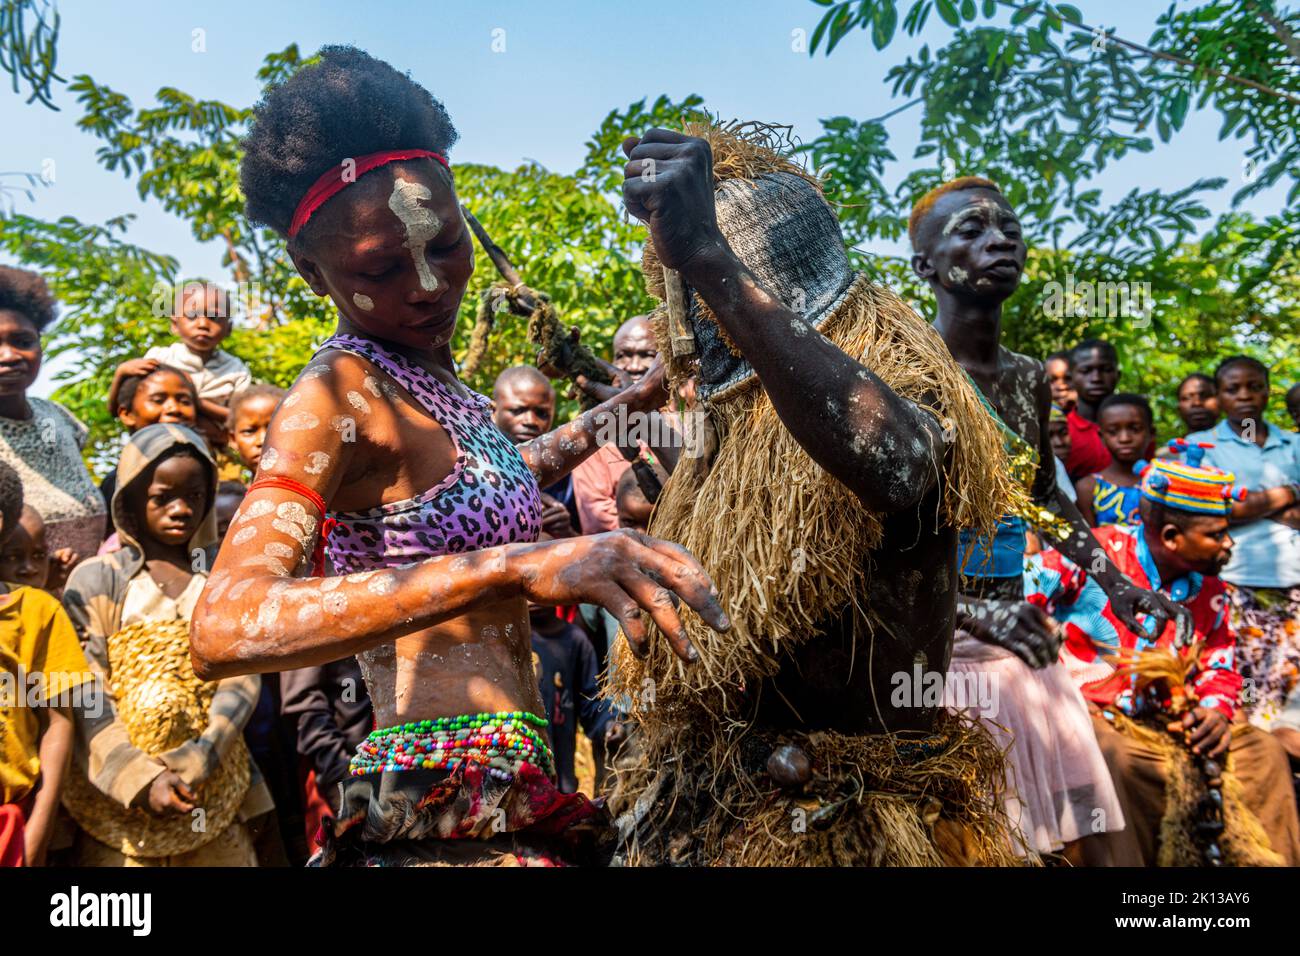 Yaka tribe practising a ritual dance, Mbandane, Democratic Republic of the Congo, Africa Stock Photo